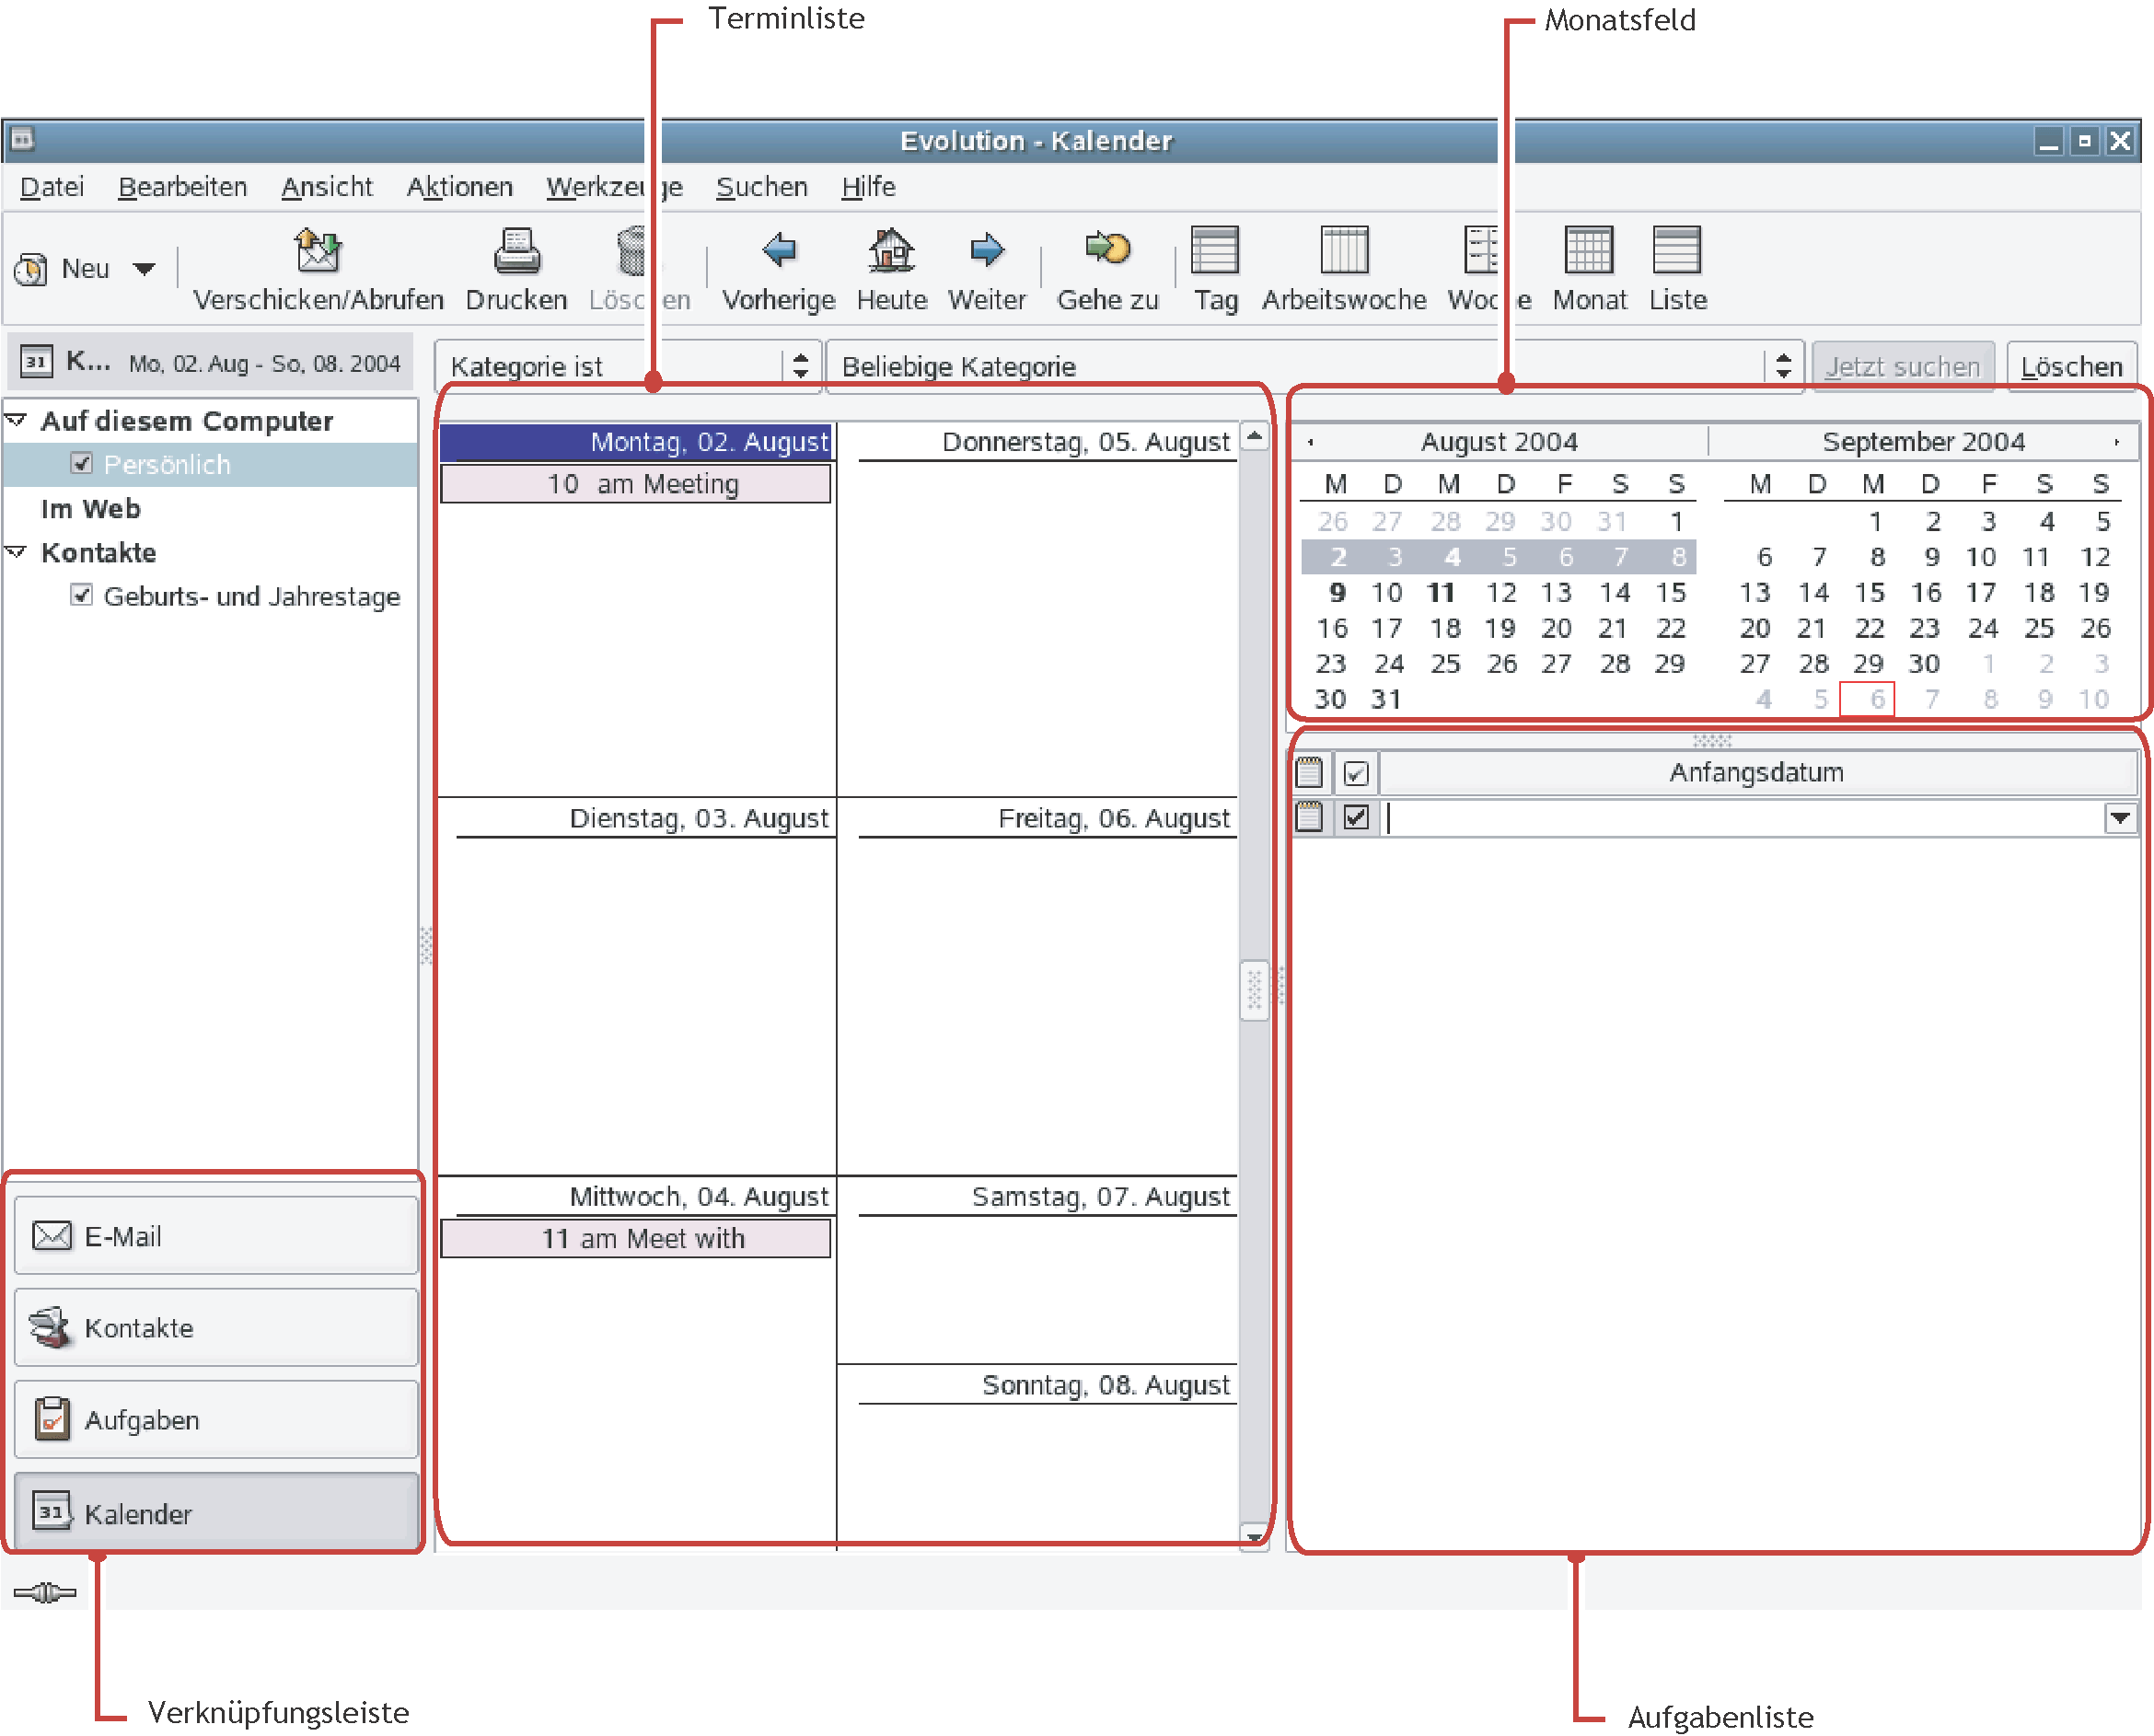 Evolution Kalender-Fenster